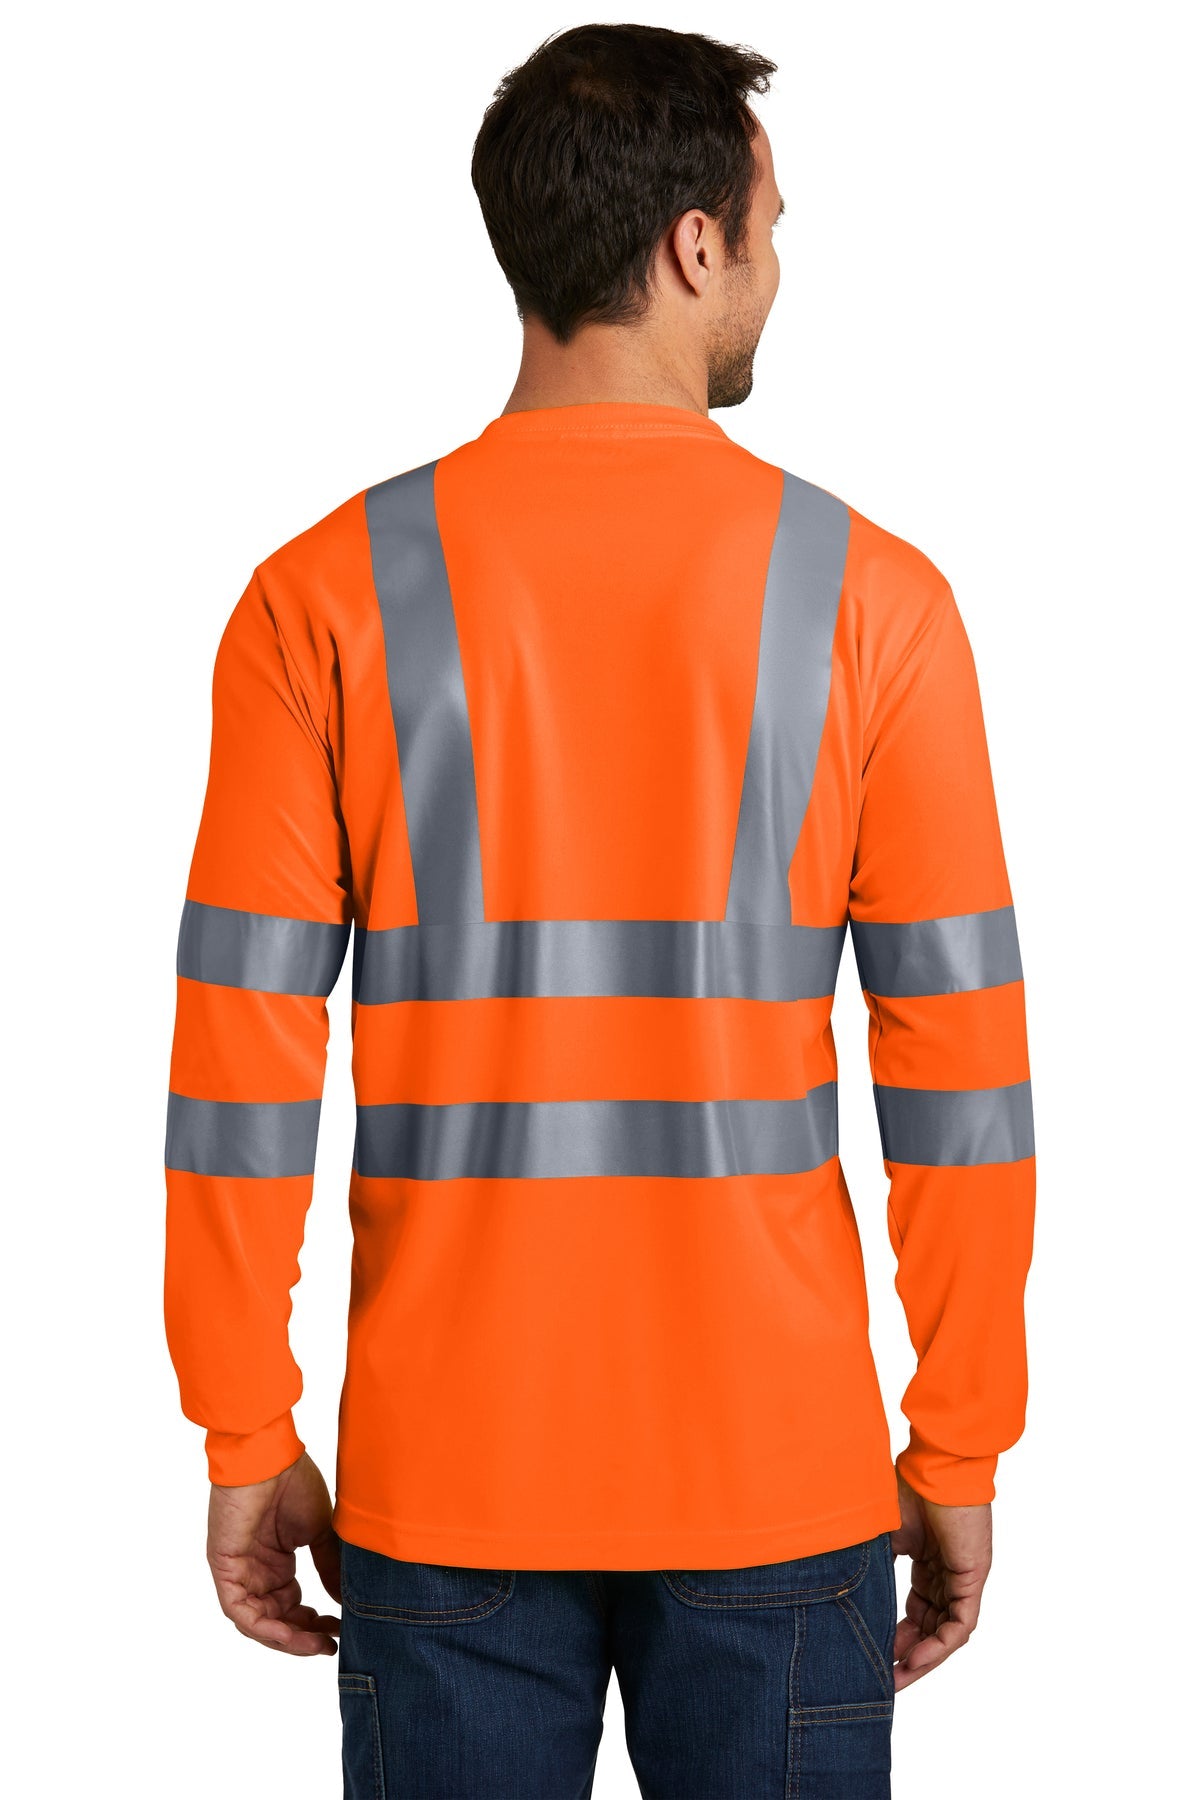 cornerstone ansi 107 class 3 long sleeve snag resistant reflective t shirt safety orange